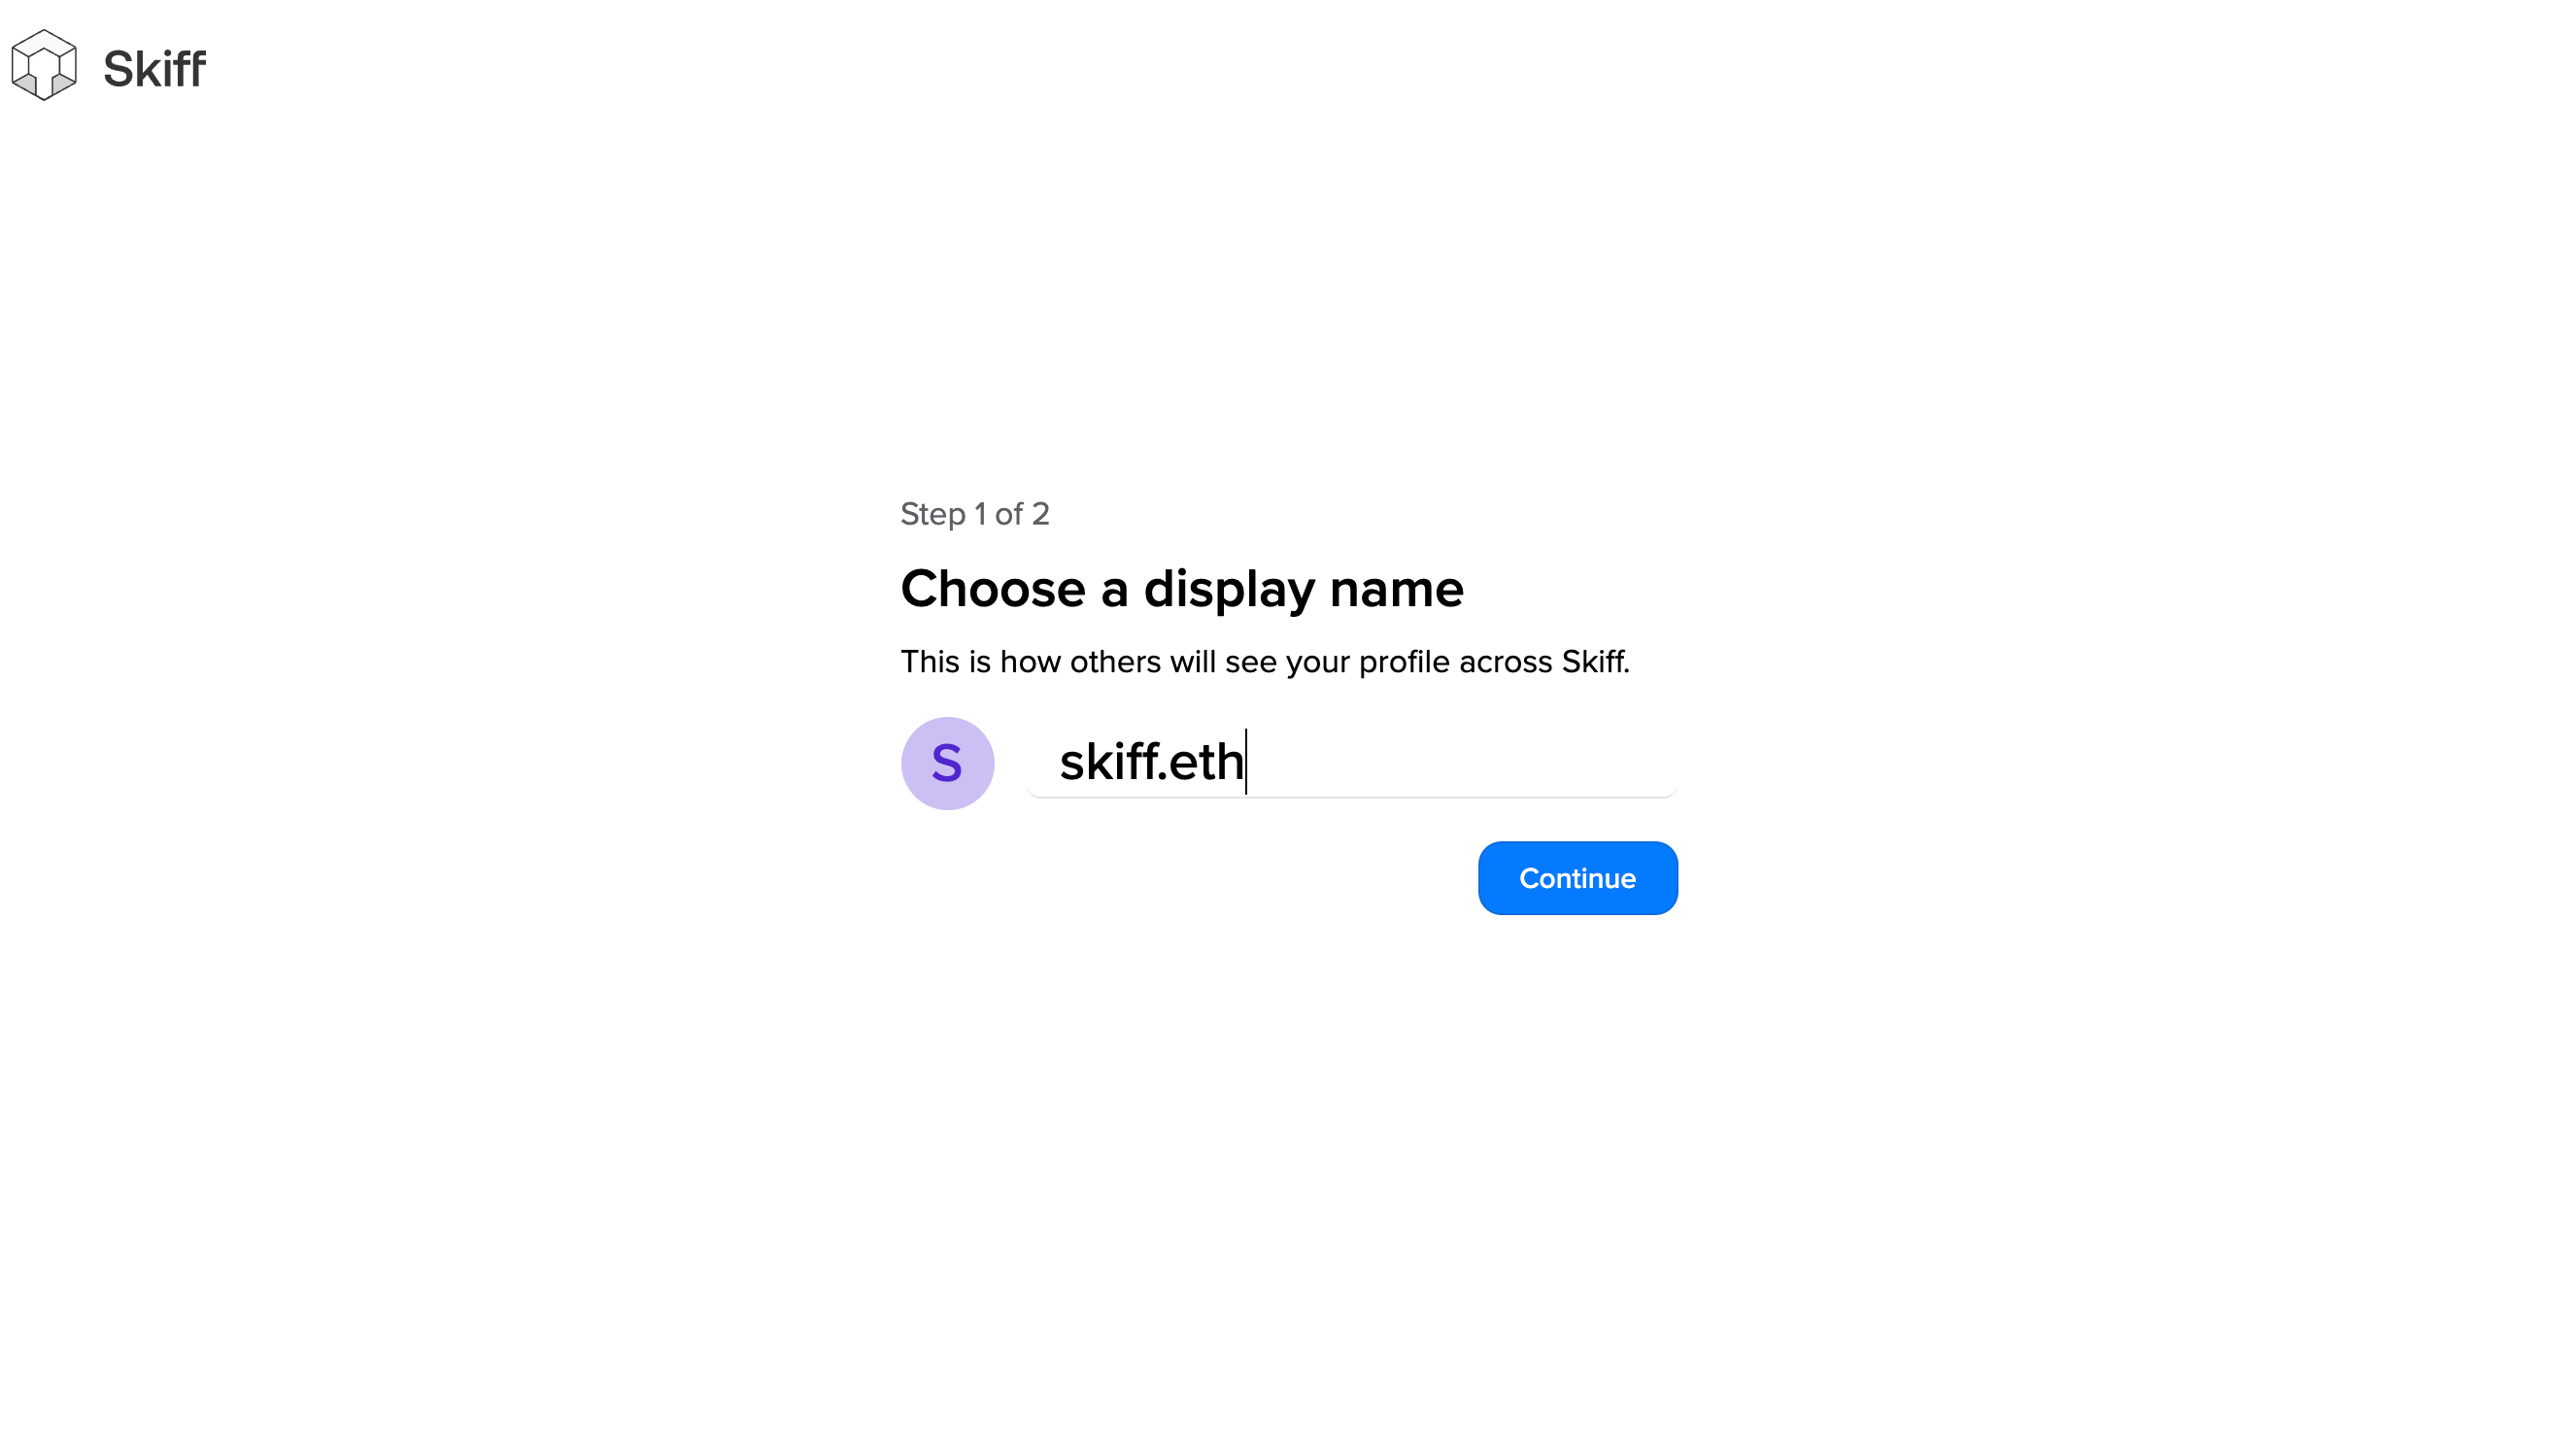 Choosing a display name